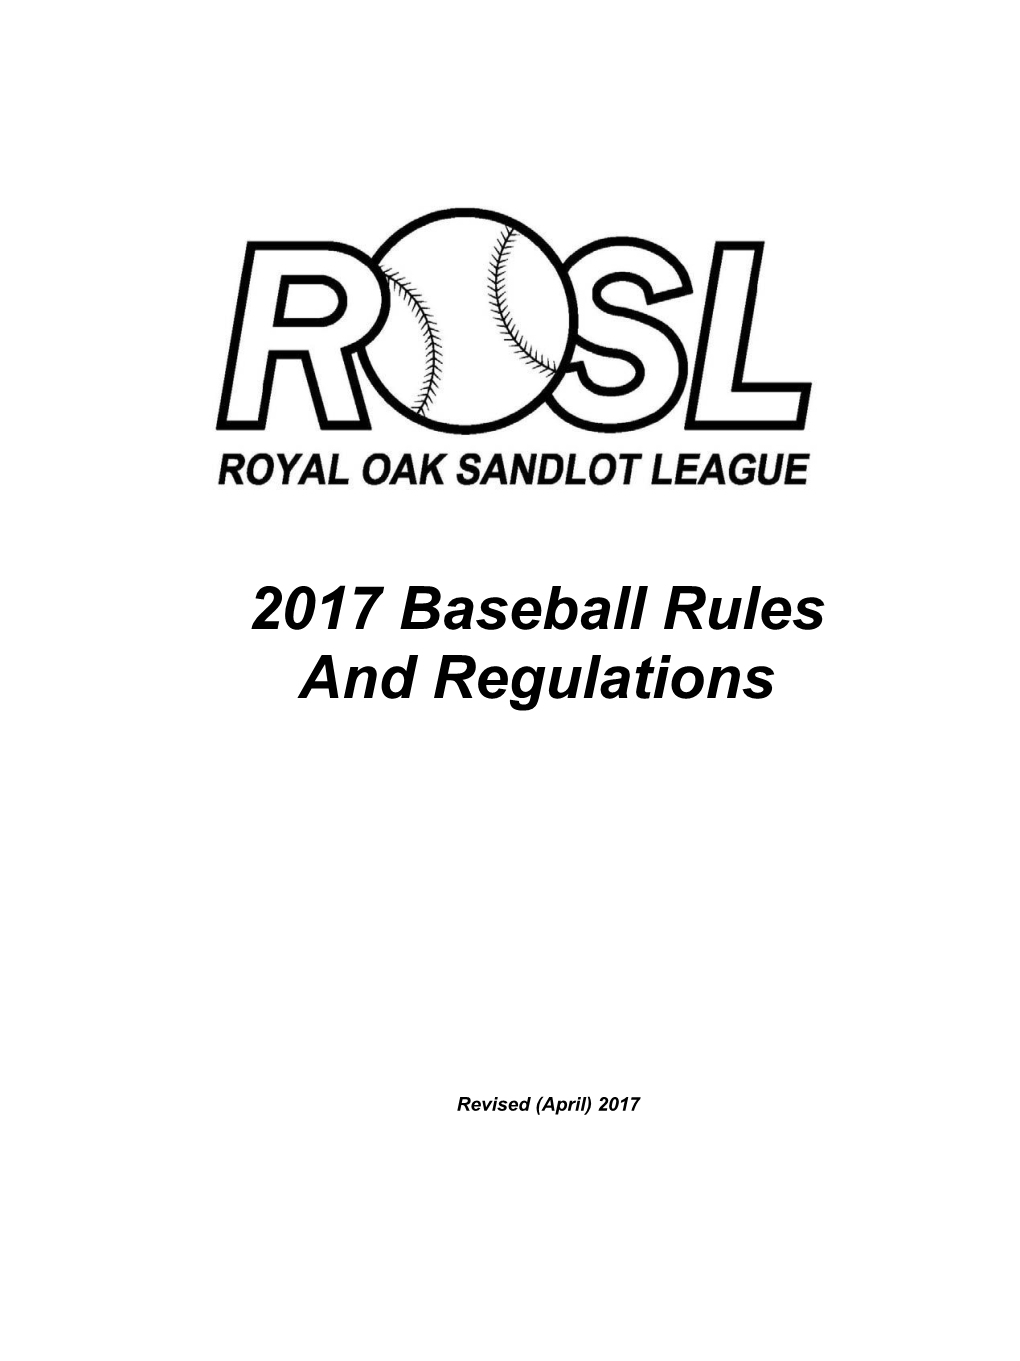 2017 Baseball Rules and Regulations